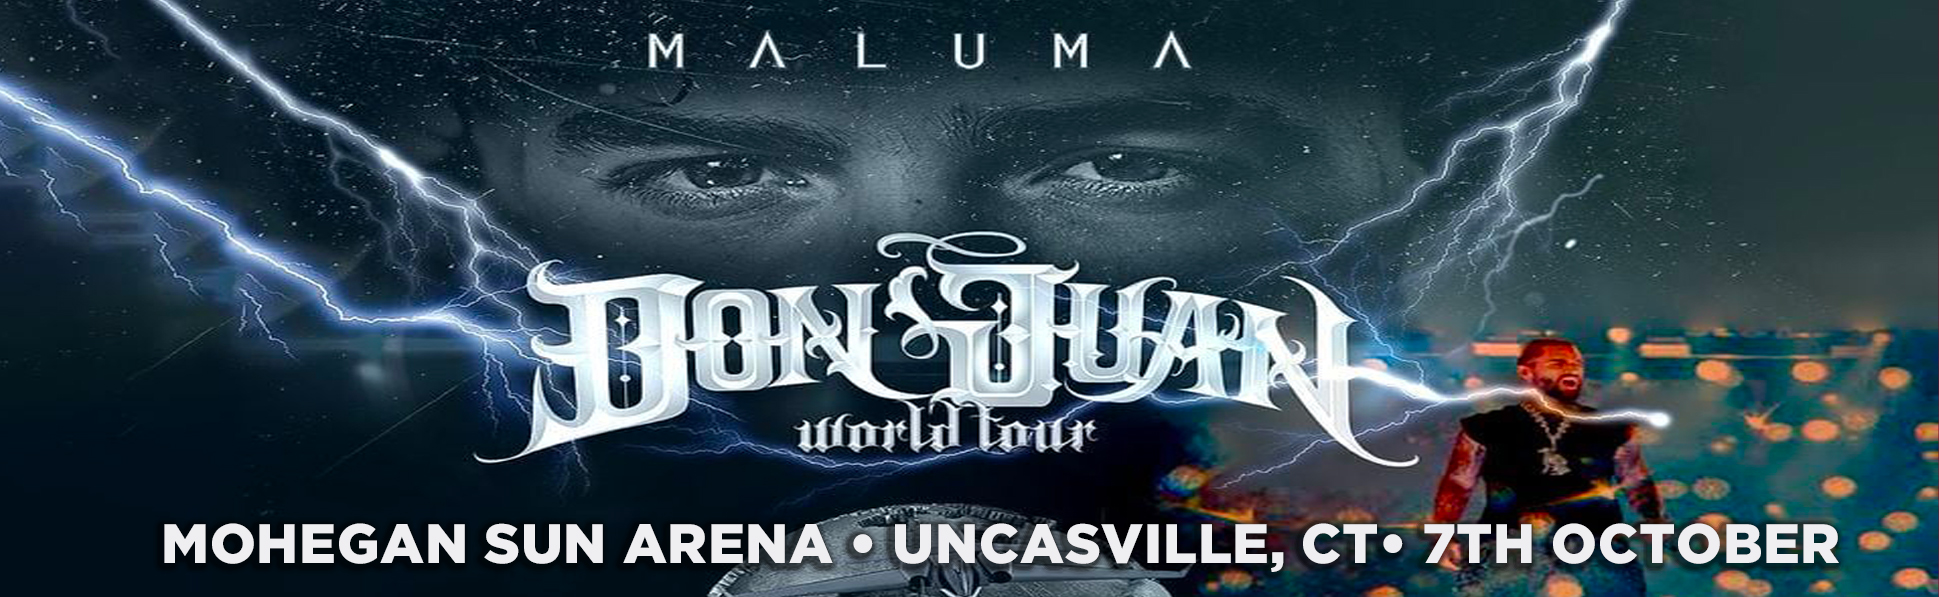 Maluma at Mohegan Sun Arena